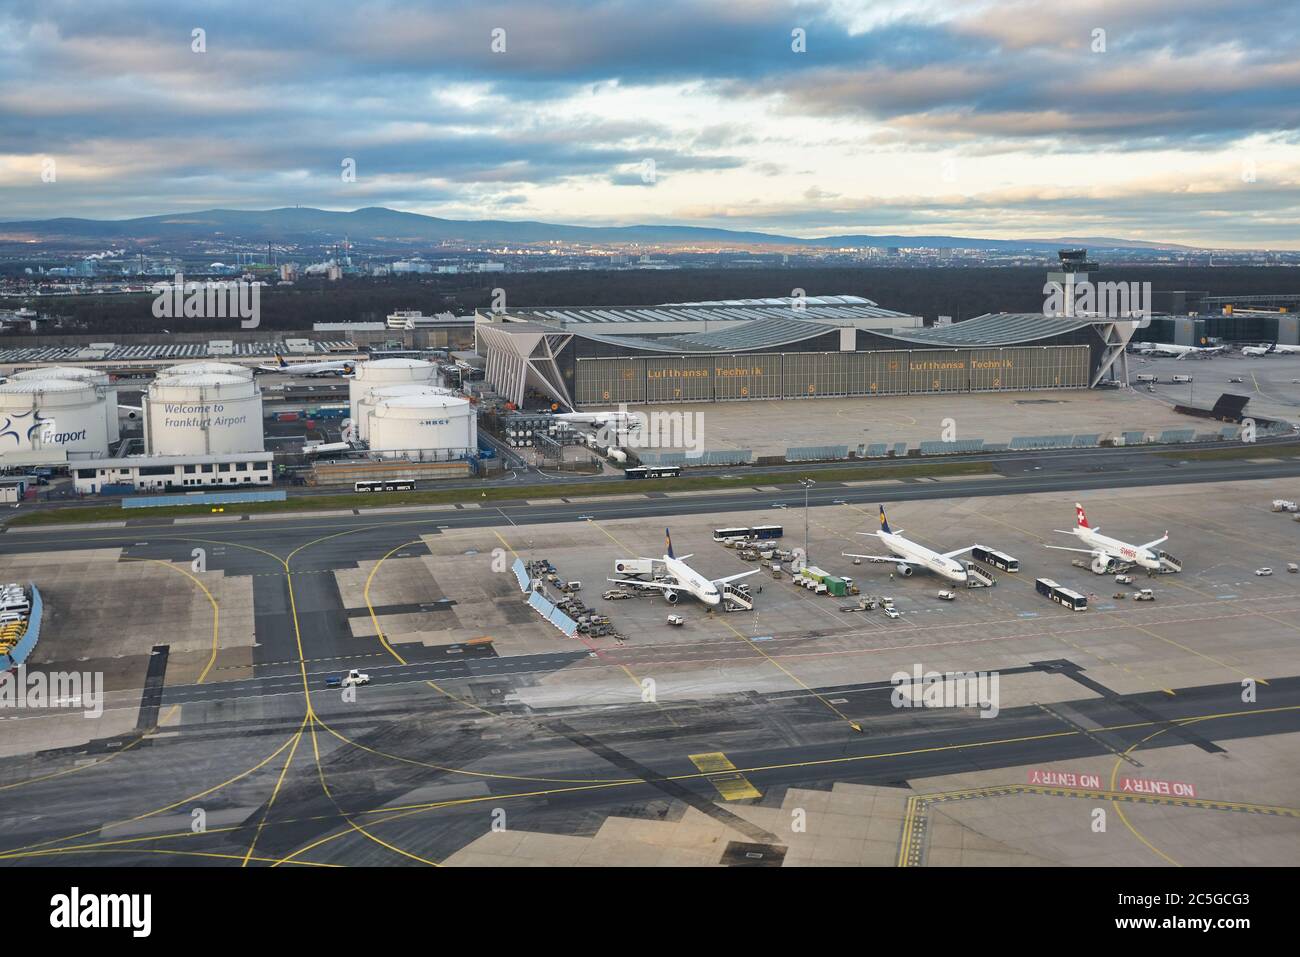 FRANCOFORTE AM MAIN, GERMANIA - CIRCA GENNAIO 2020: Vista dell'aeroporto di Francoforte sul meno. Foto Stock